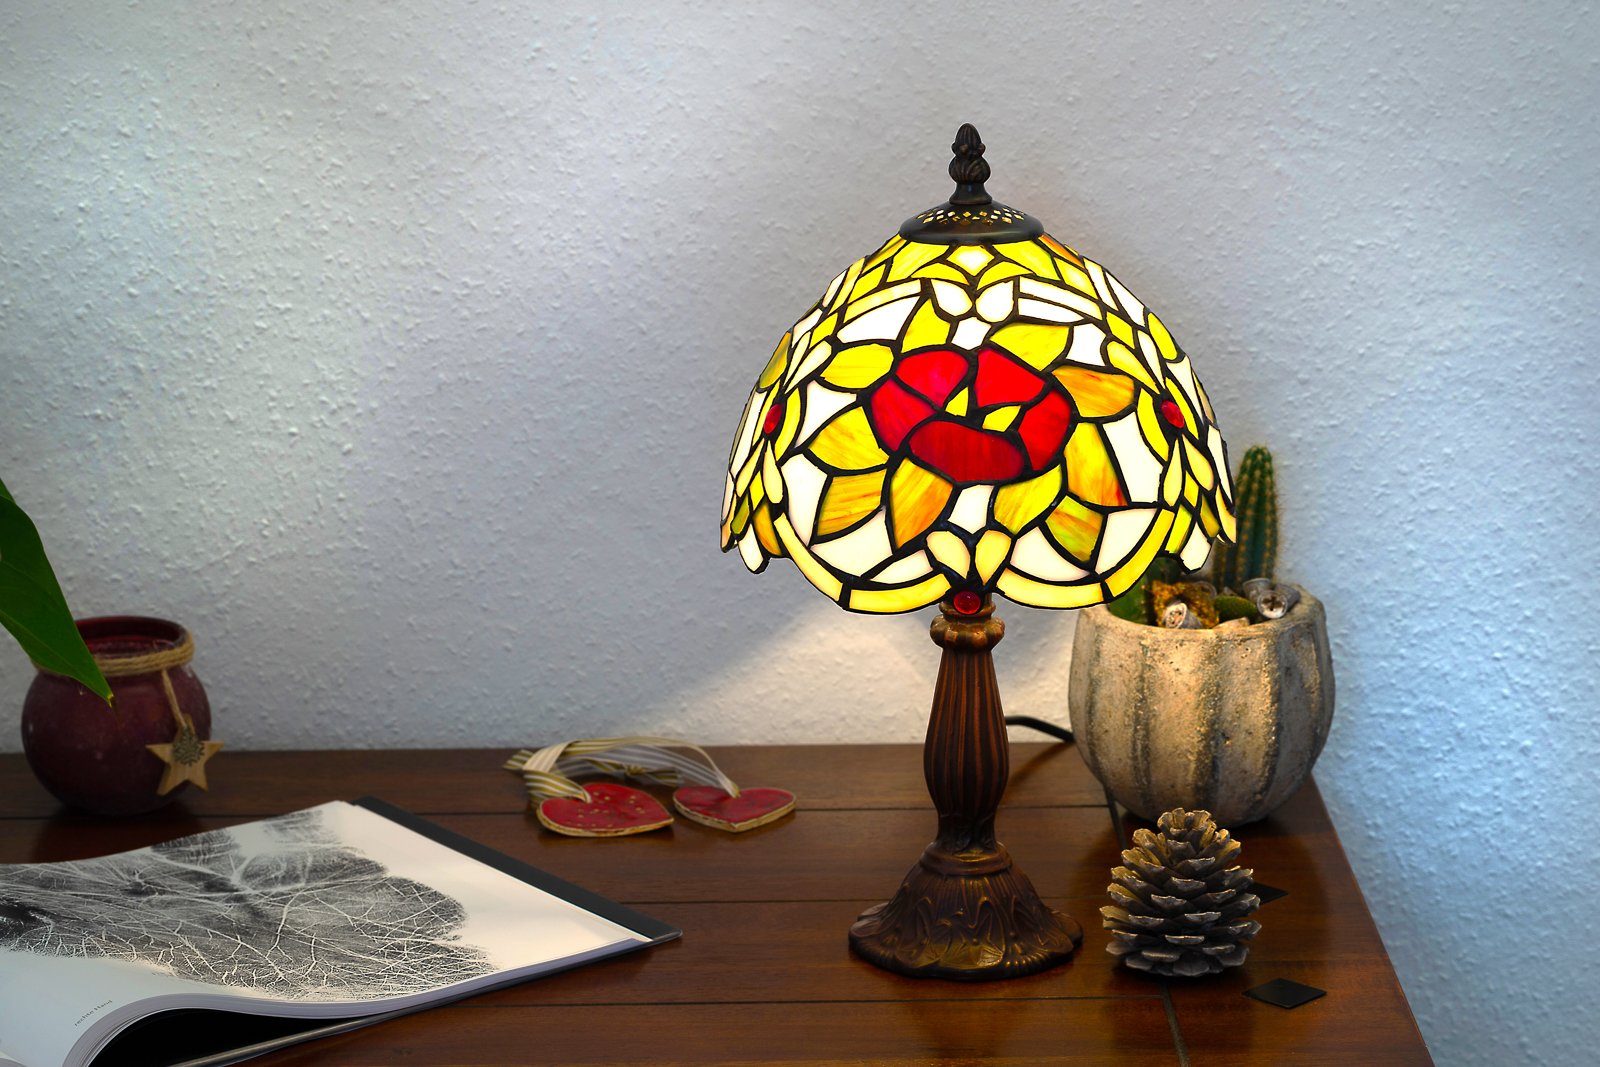 Motiv Blume Tischlampe Lampe Tiffany Style Stehlampe Tiff148 BIRENDY Dekorationslampe